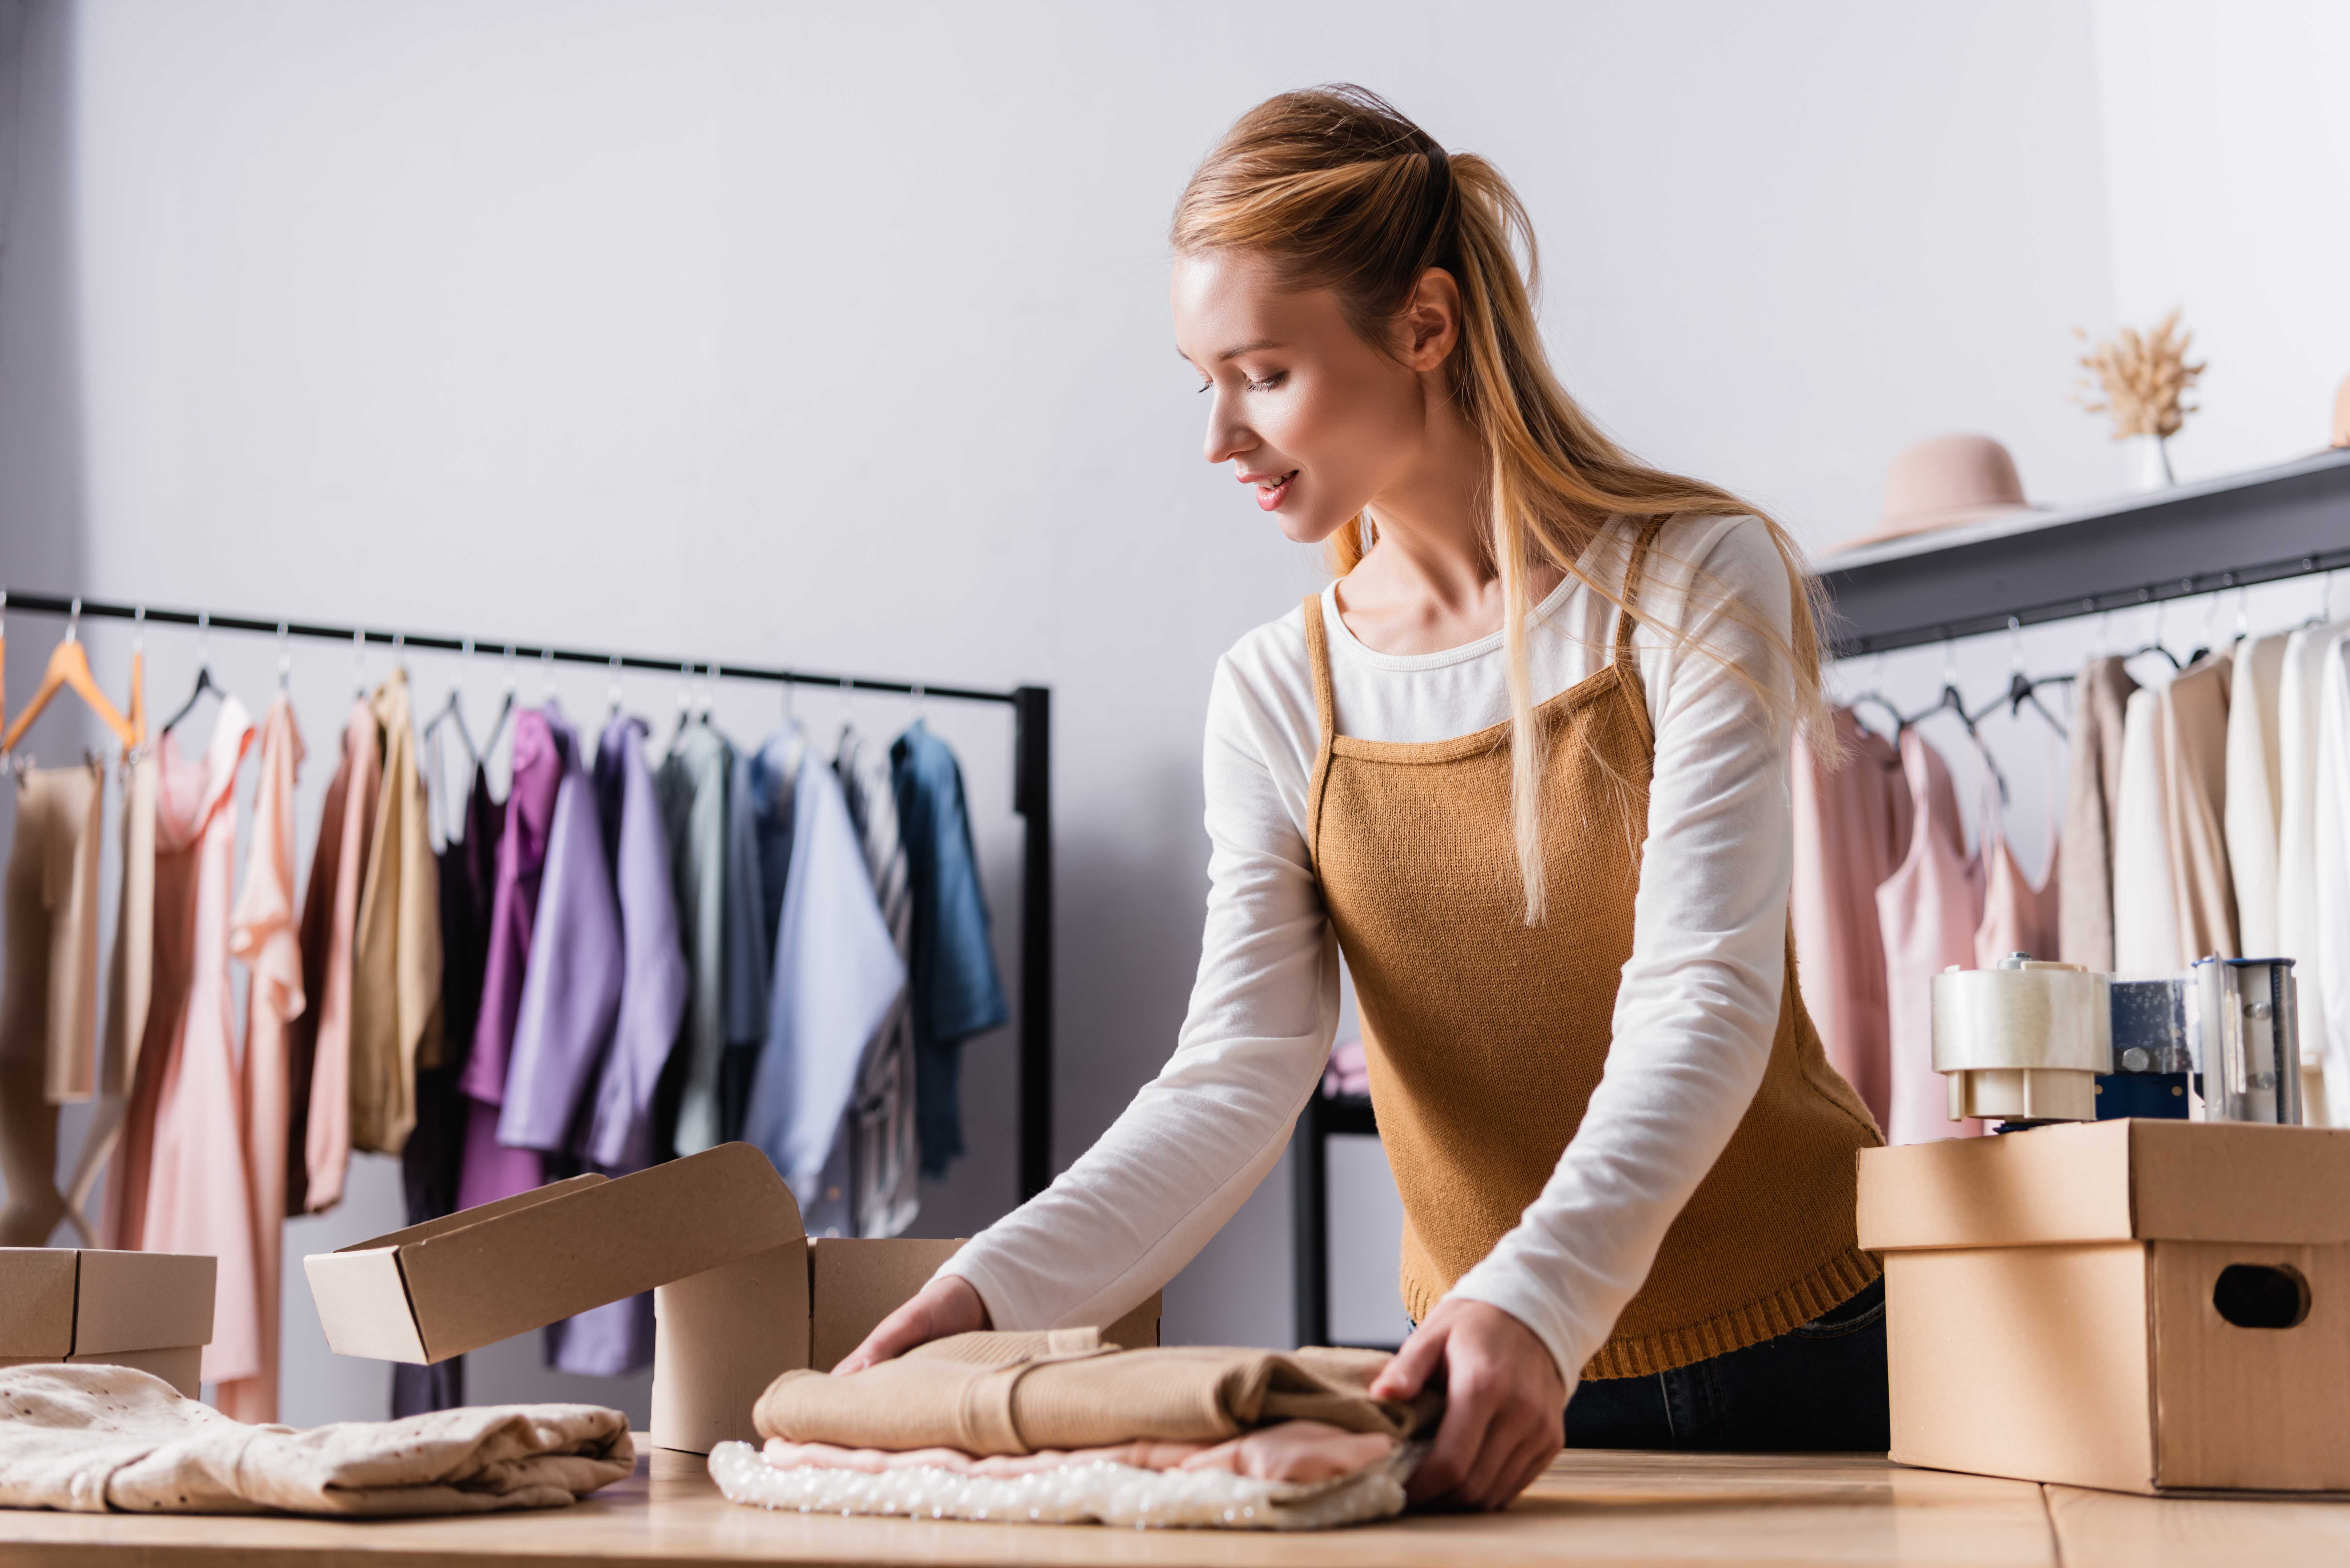 Business woman organising clothing orders